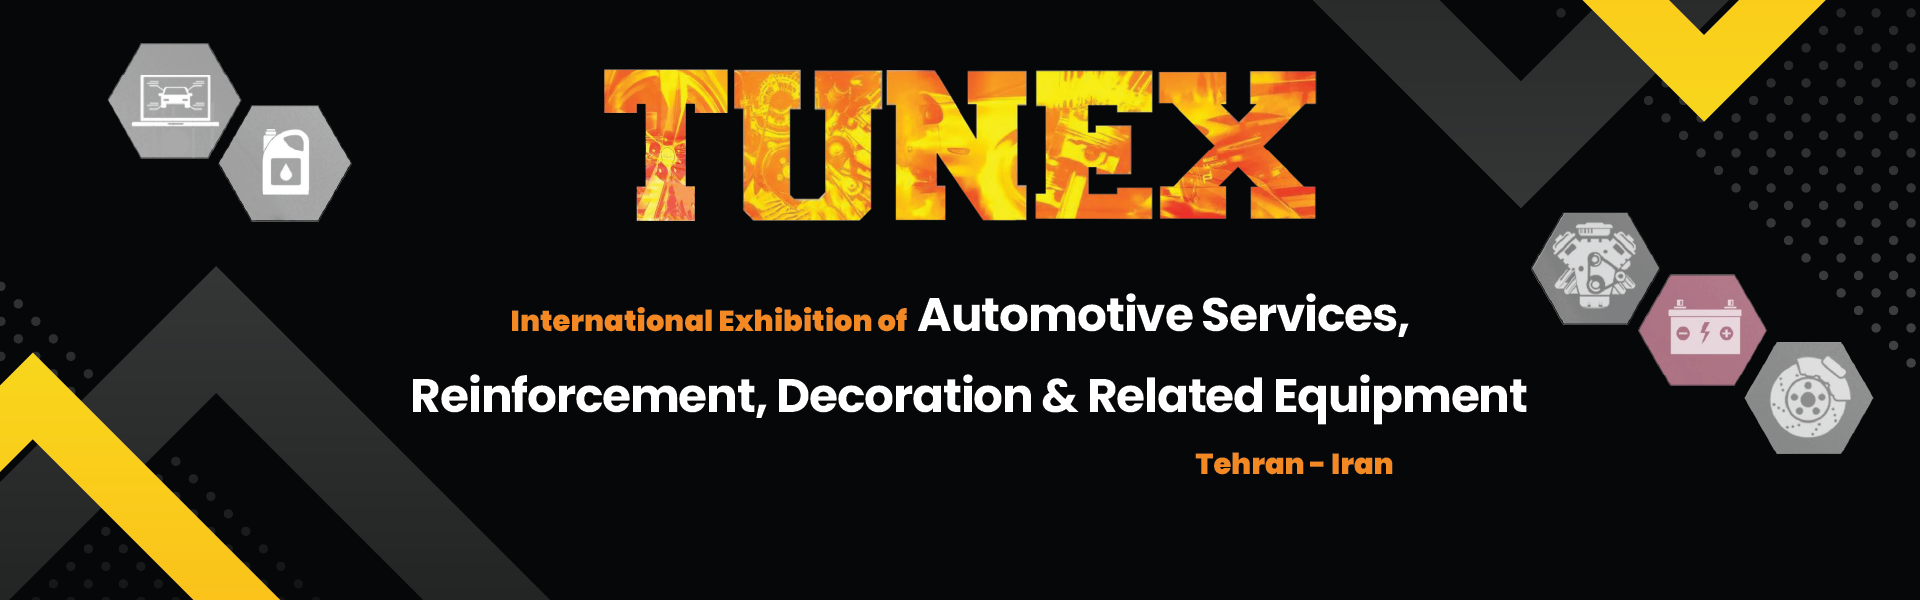 Iran automotive reinforcement and decoration exhibition